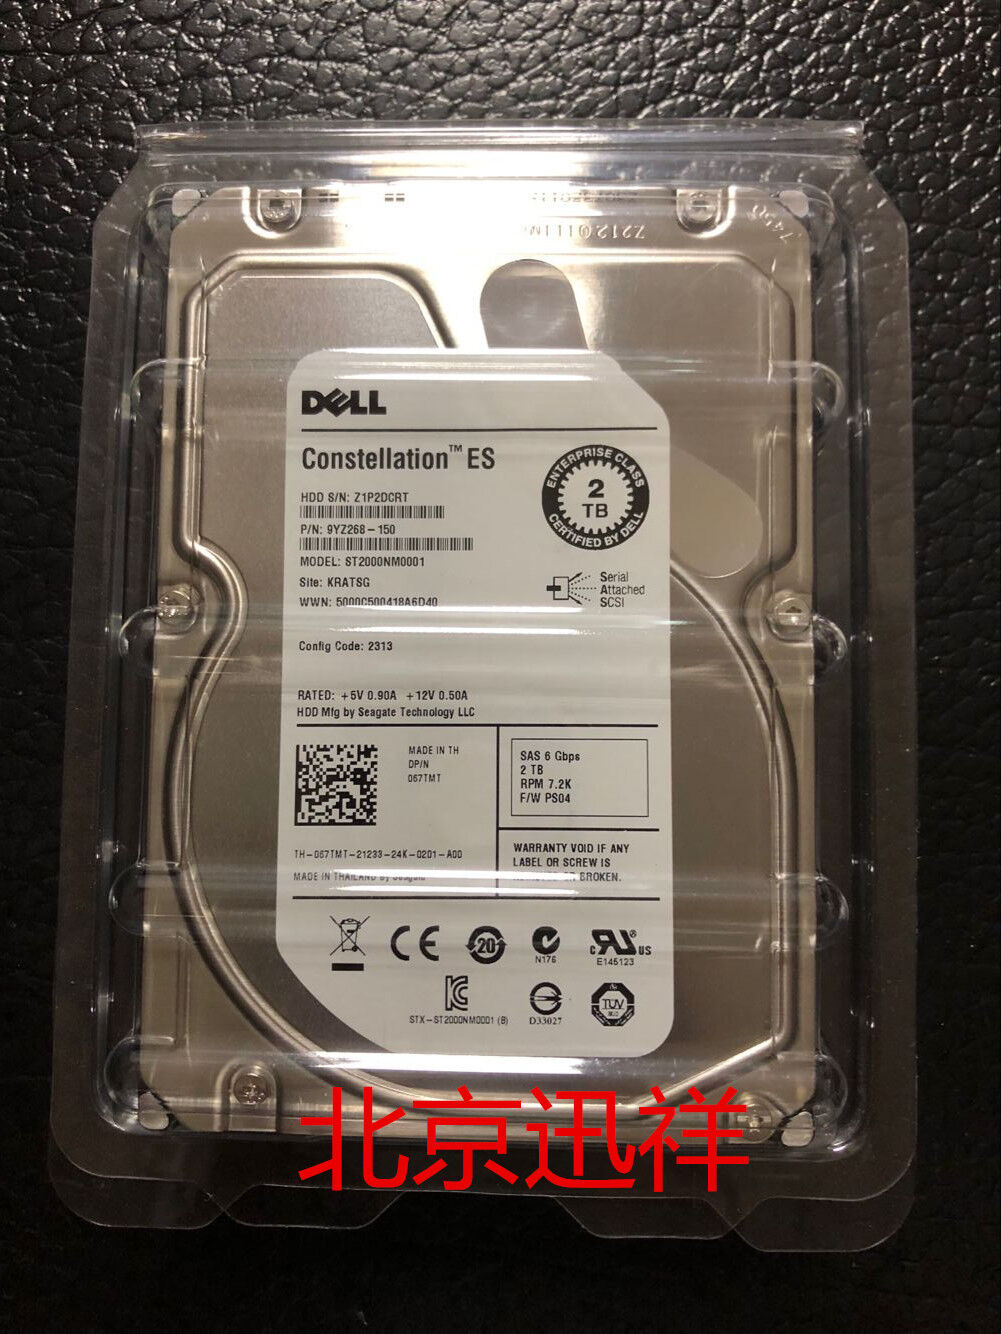  Dell 67TMT 2TB 7.2K SAS 3.5 6G ST Constellation ES ST2000NM0001 HDD Hard Drive